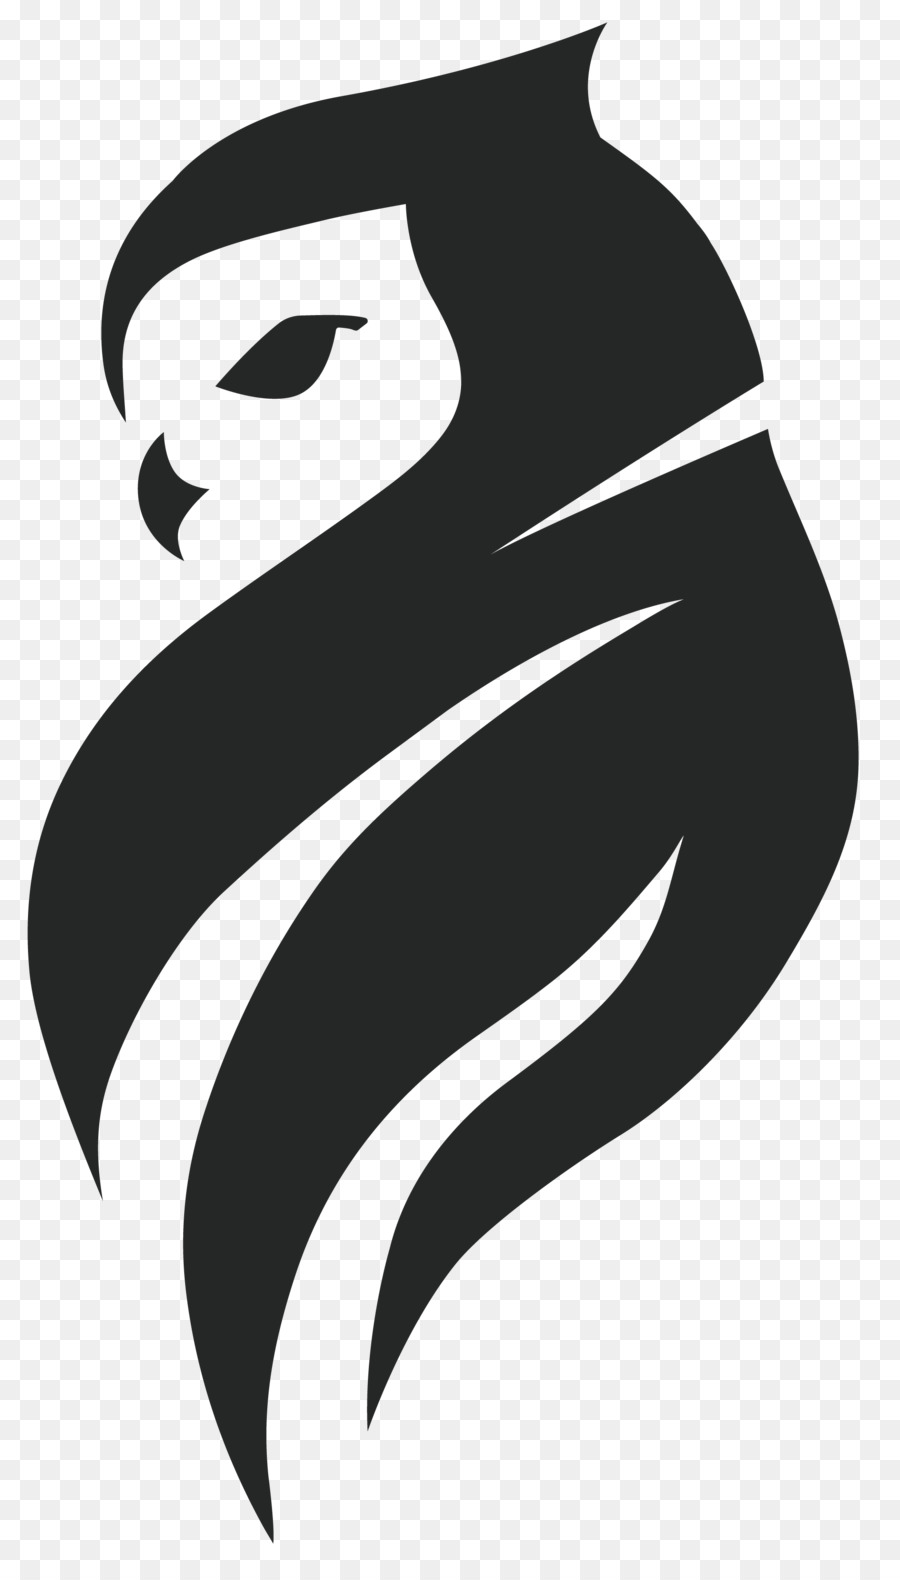 Steam Image Logo Silhouette Clip art - gg logo png download - 1896*3300 - Free Transparent Logo png Download.